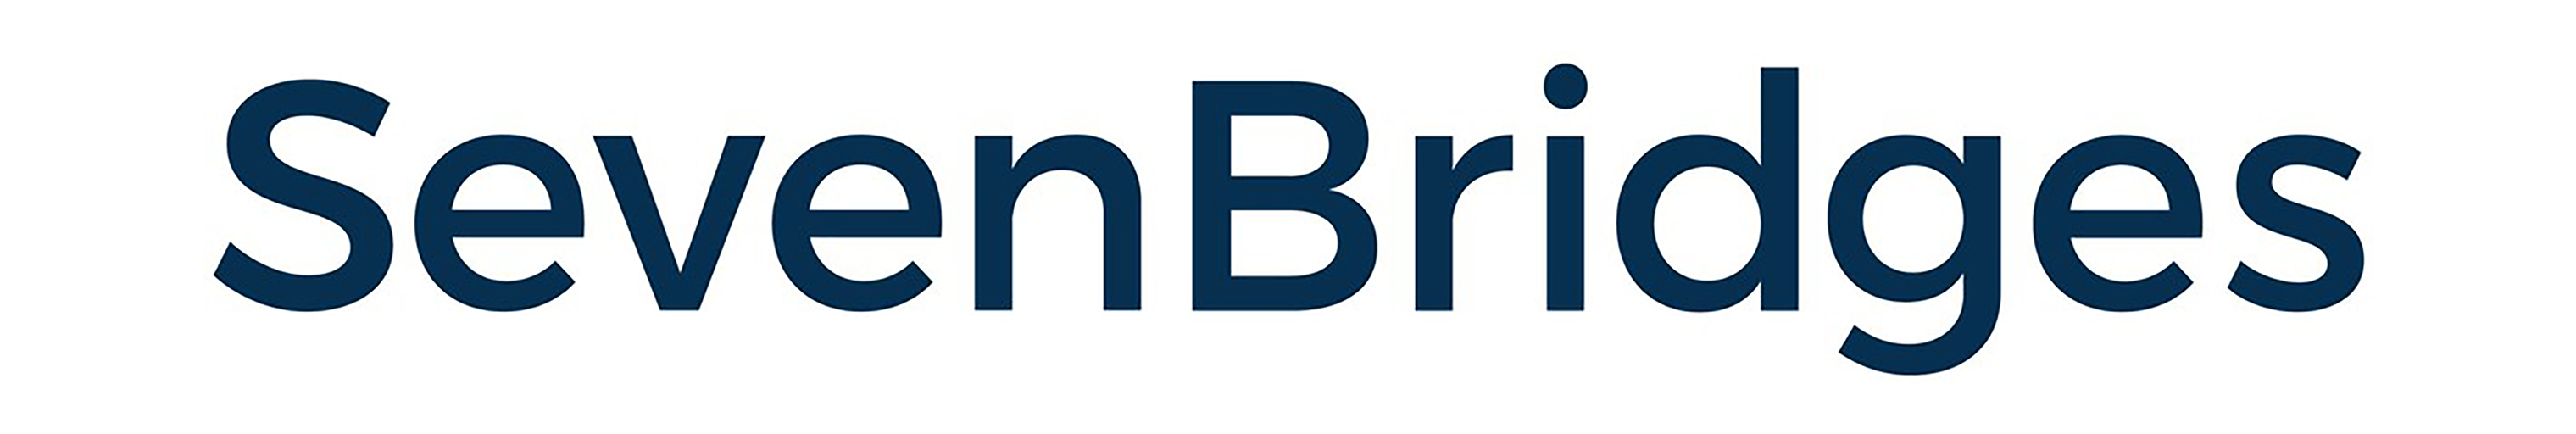 Seven_Bridges_logo